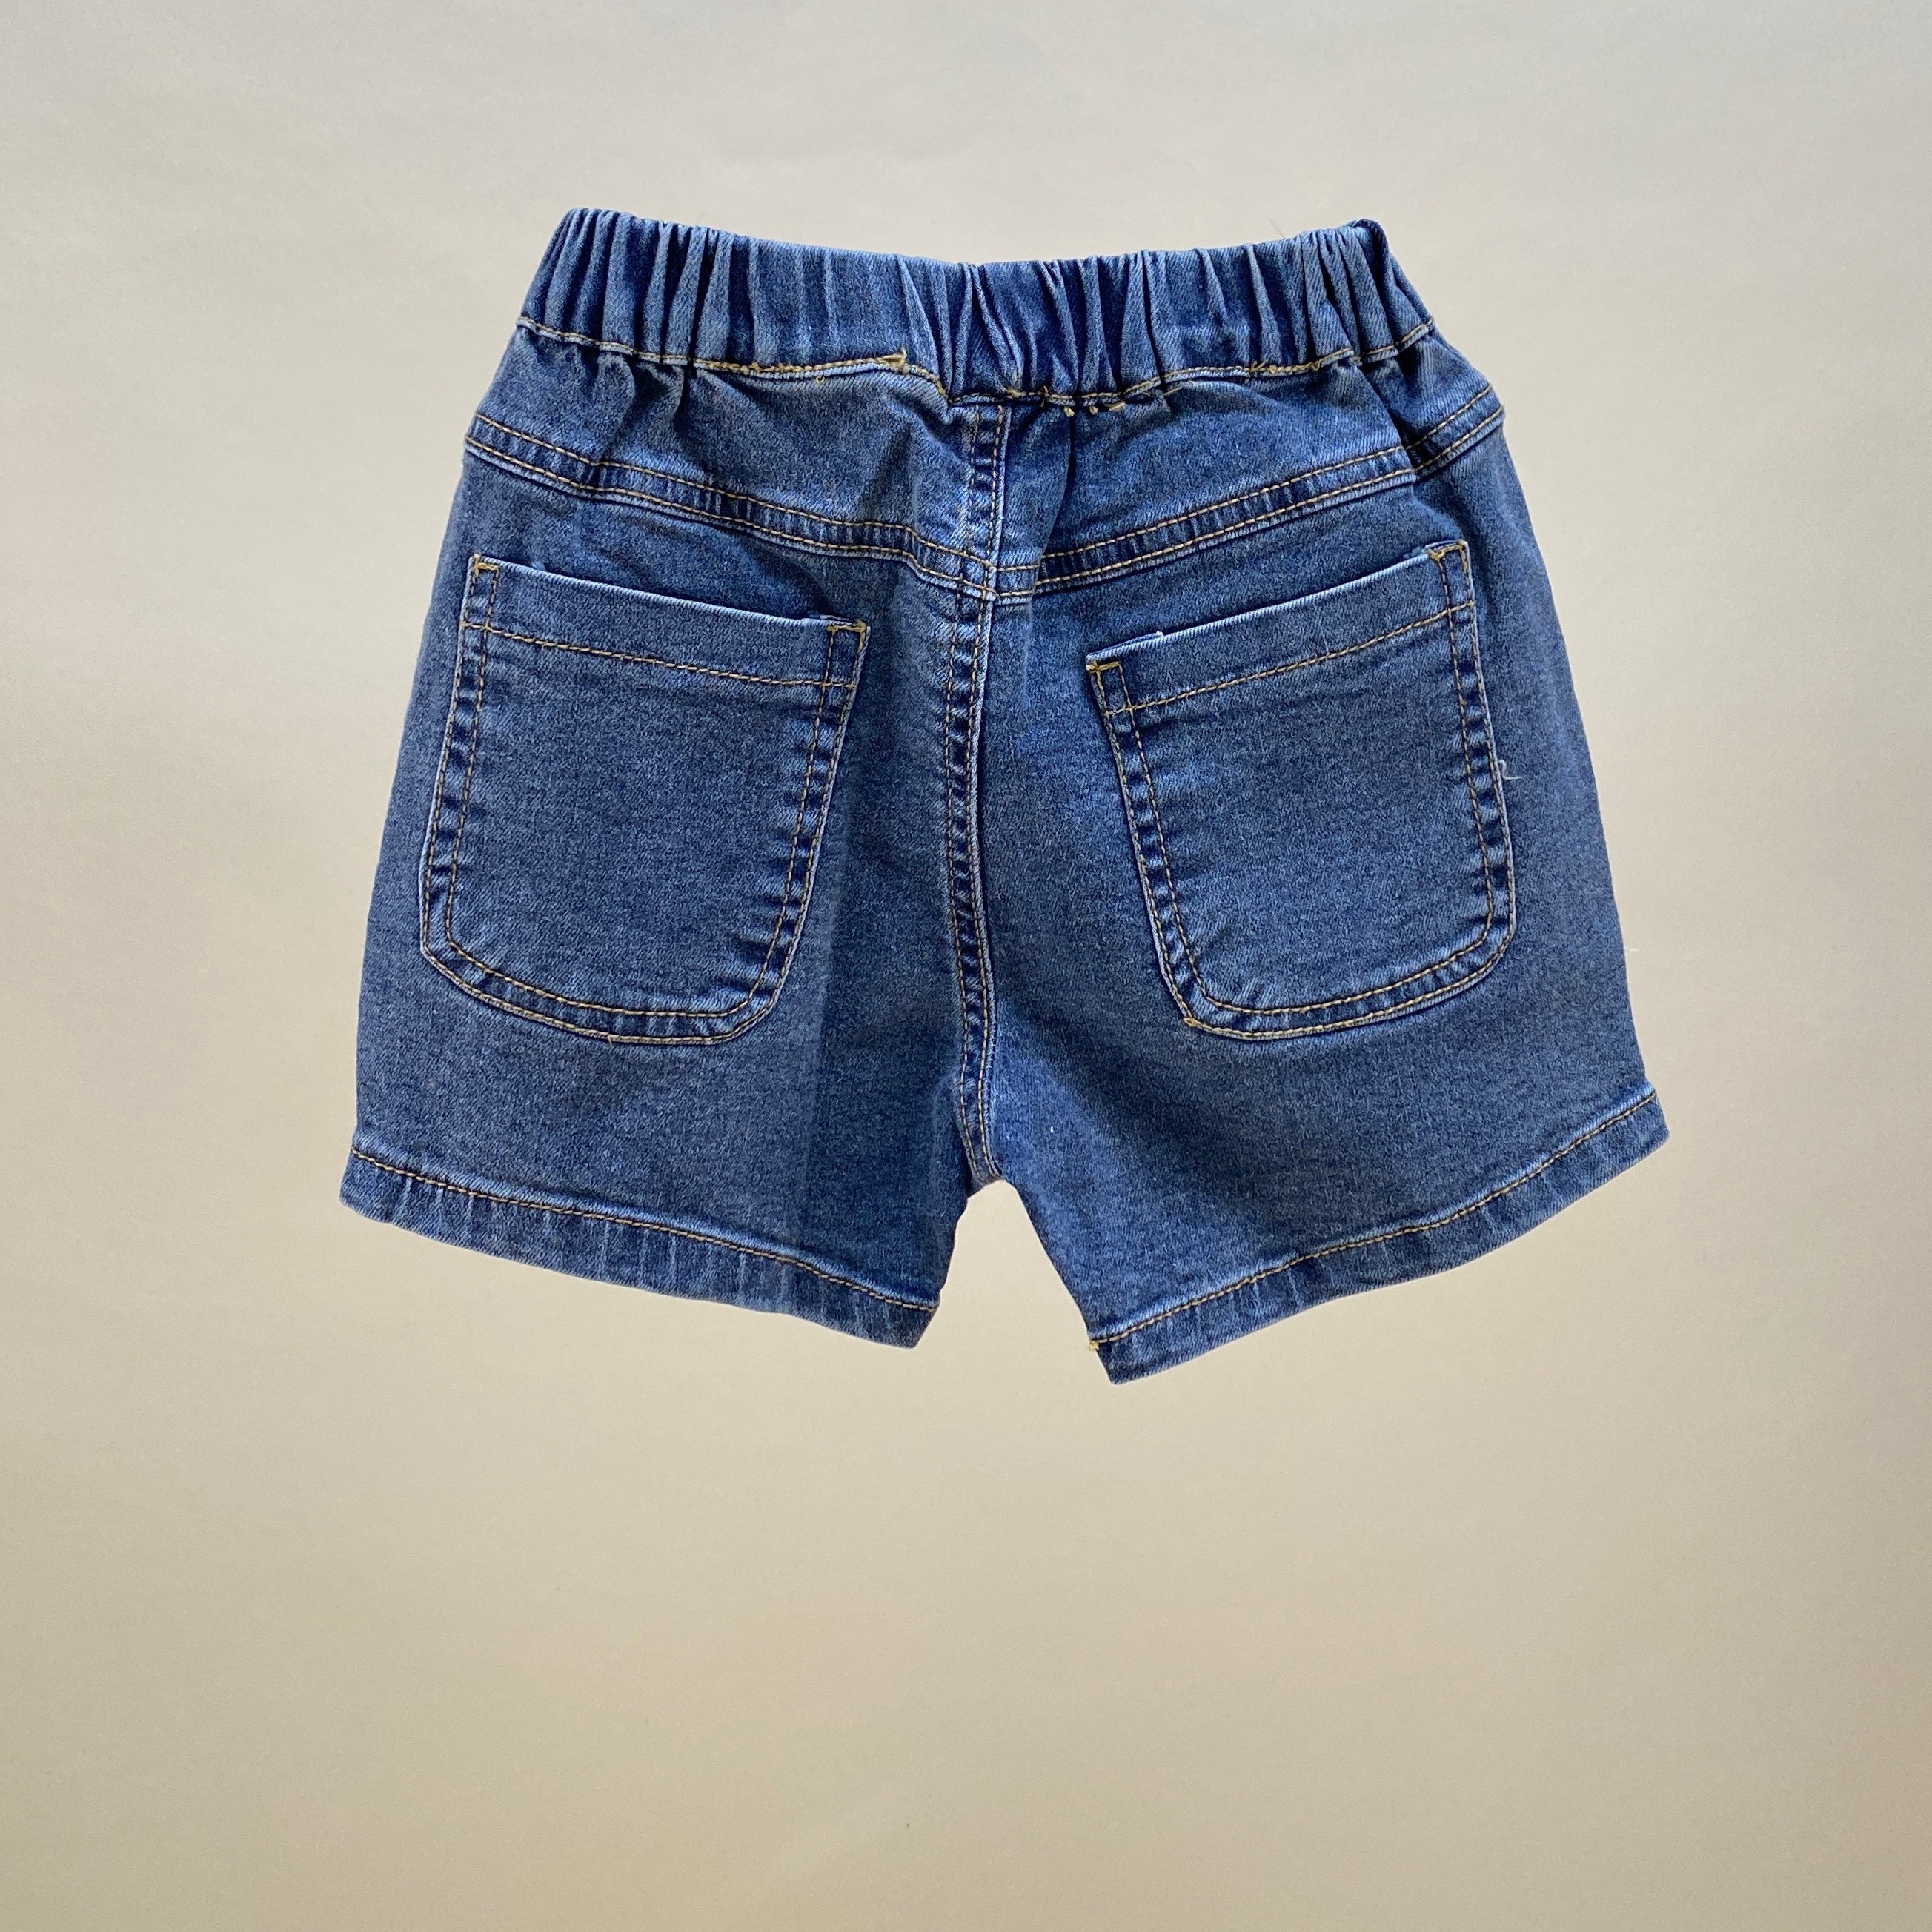 Snailbobo classic Denim Shorts (Ready Stock)